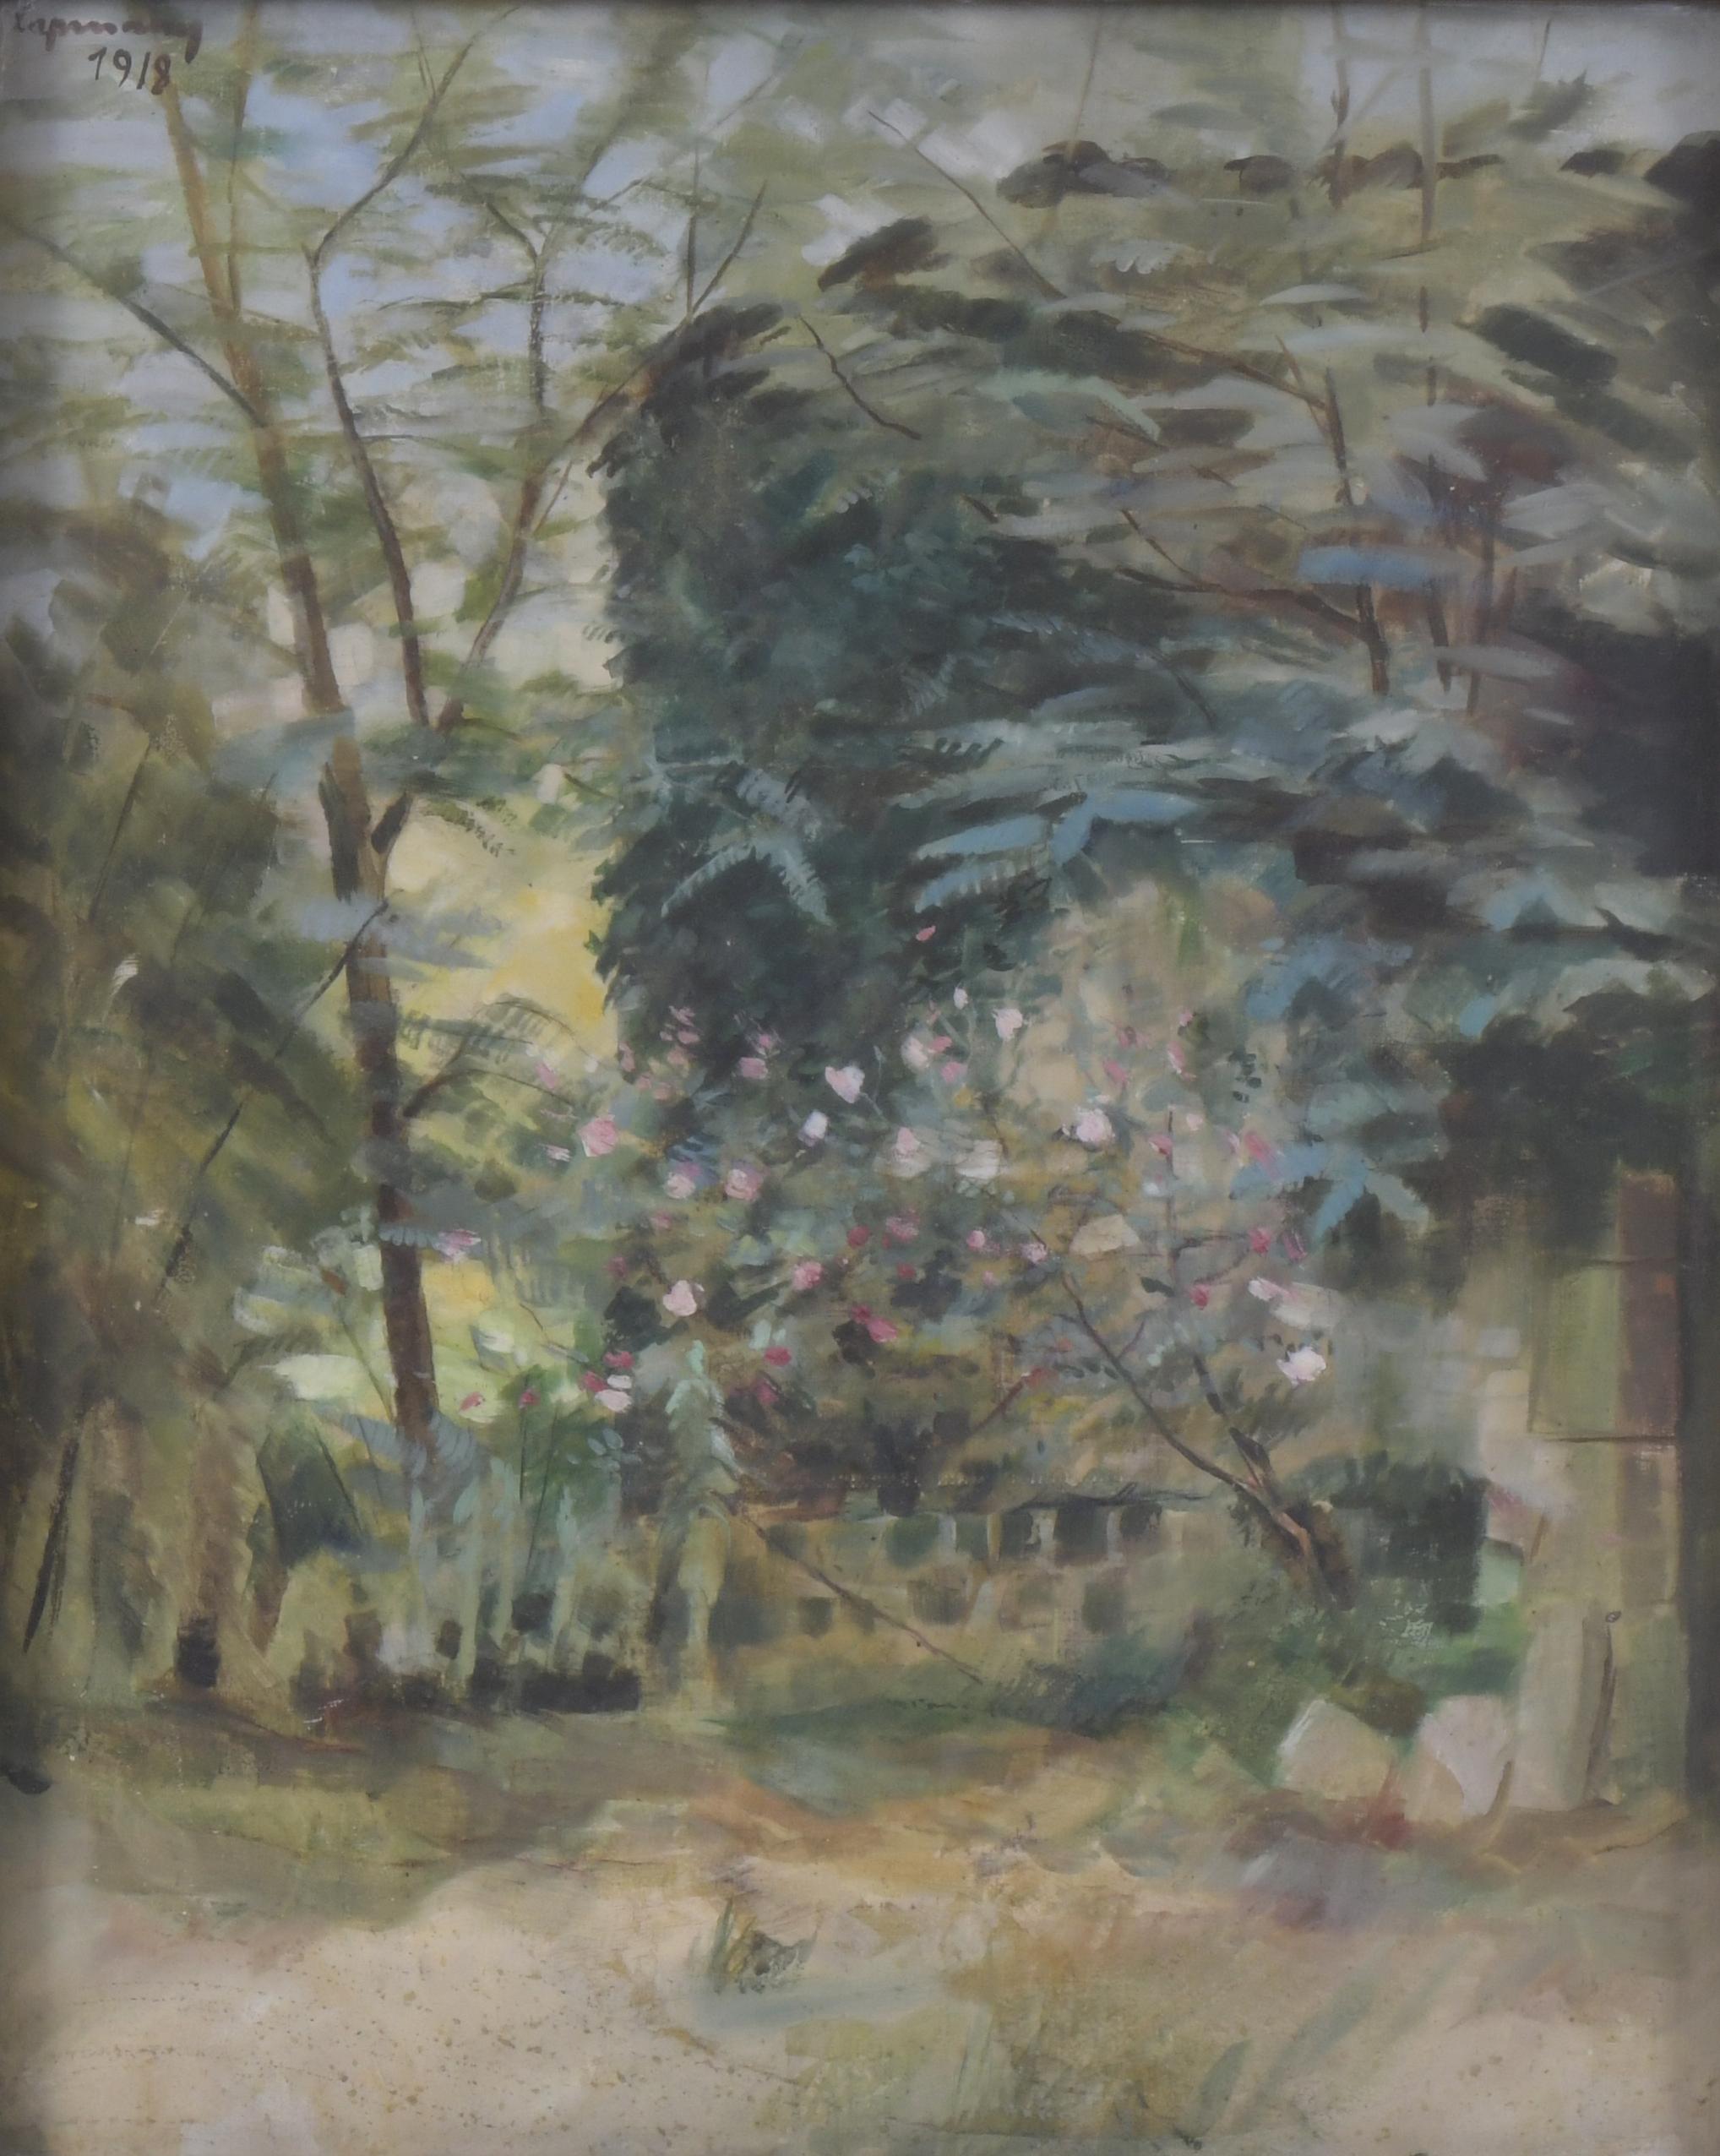 RAMON CAPMANY (1899-1992). "JARDÍN", 1918.